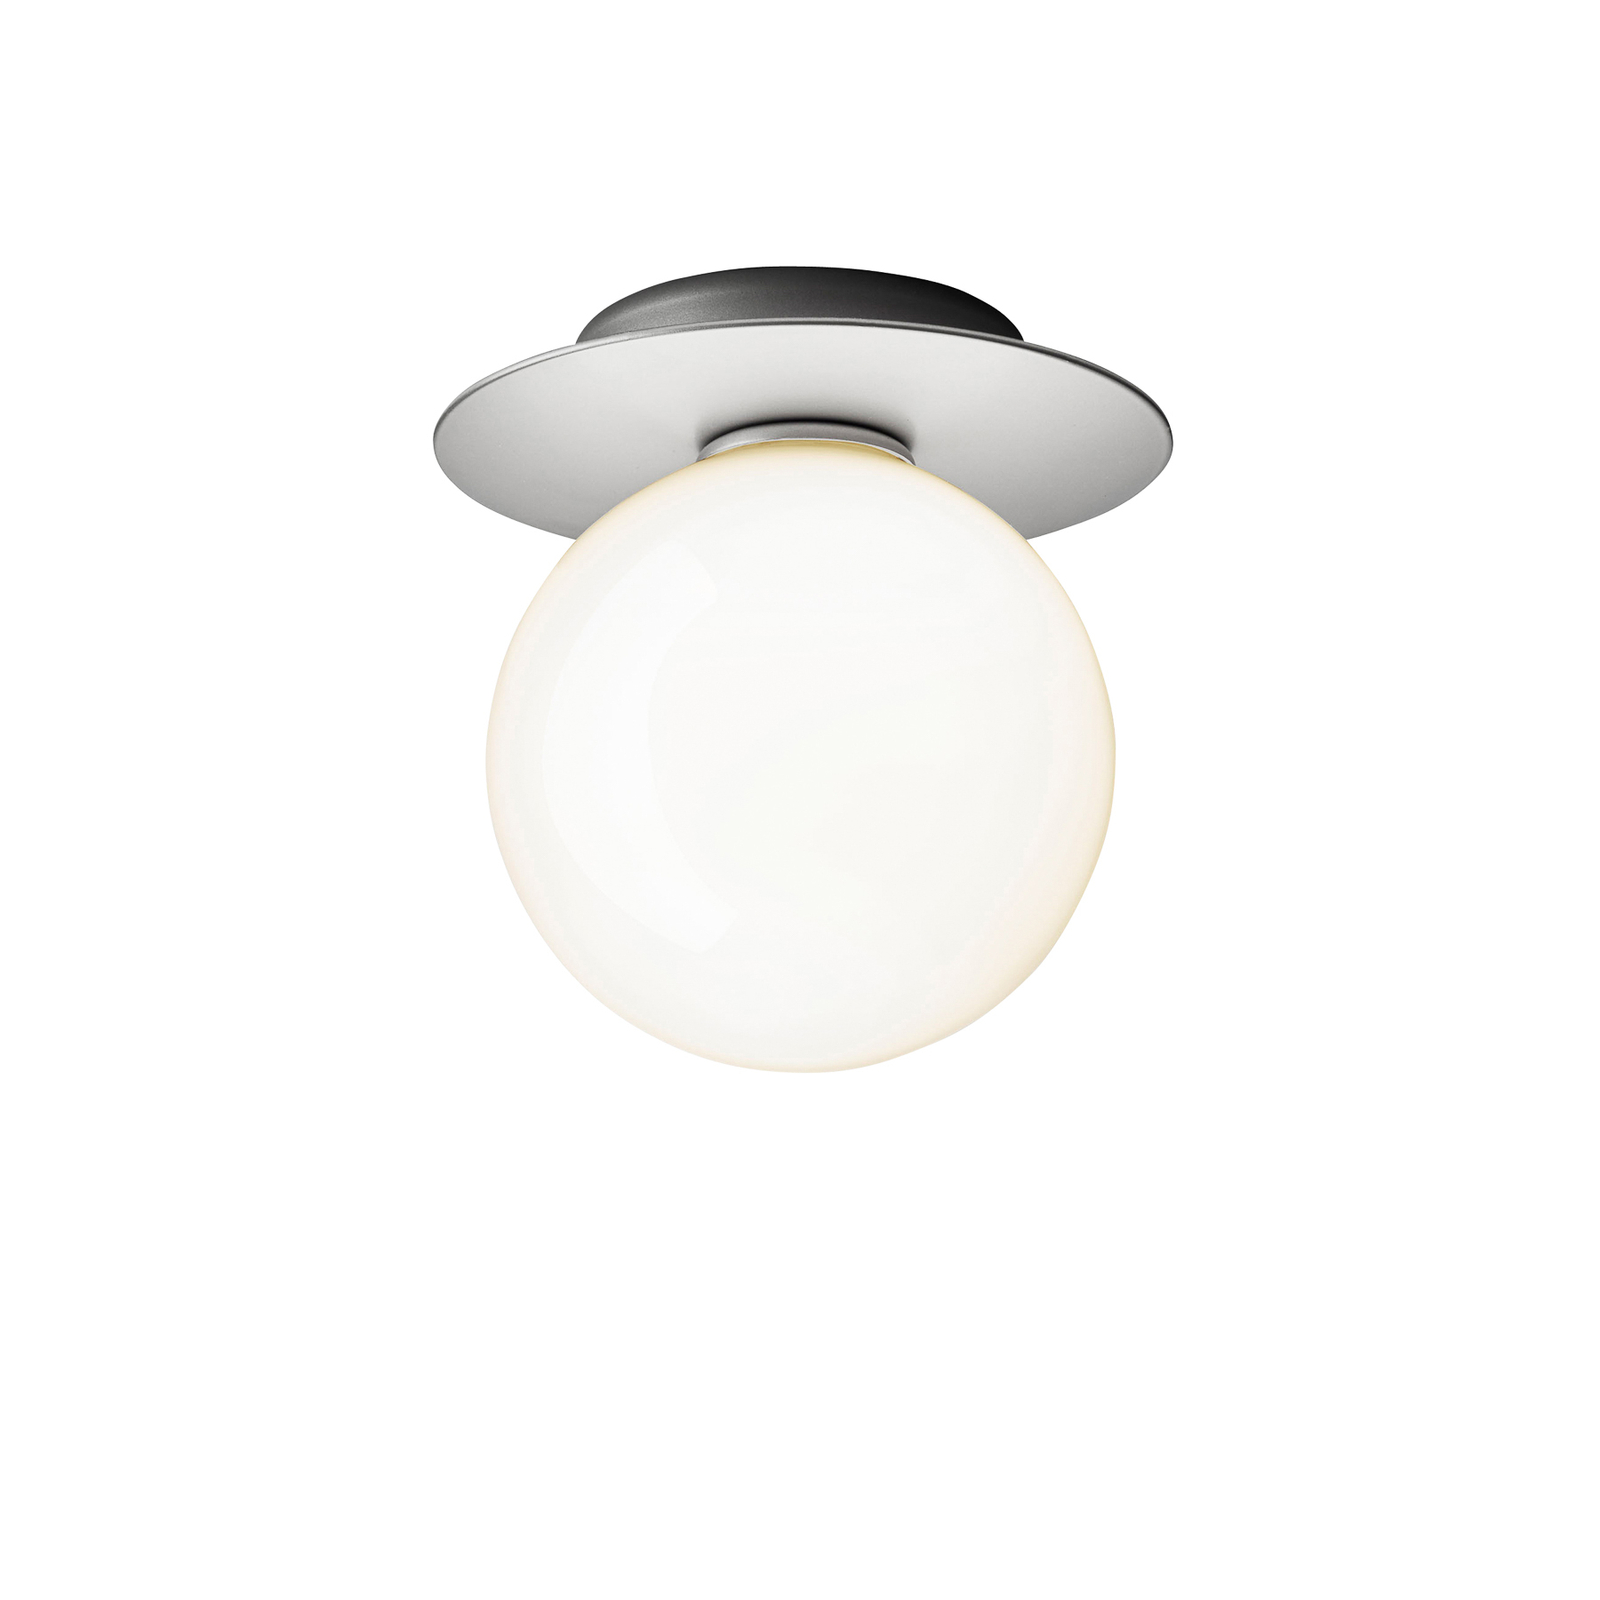 Nuura Liila 1 Medium wandlamp, 1-lamp zilver/wit